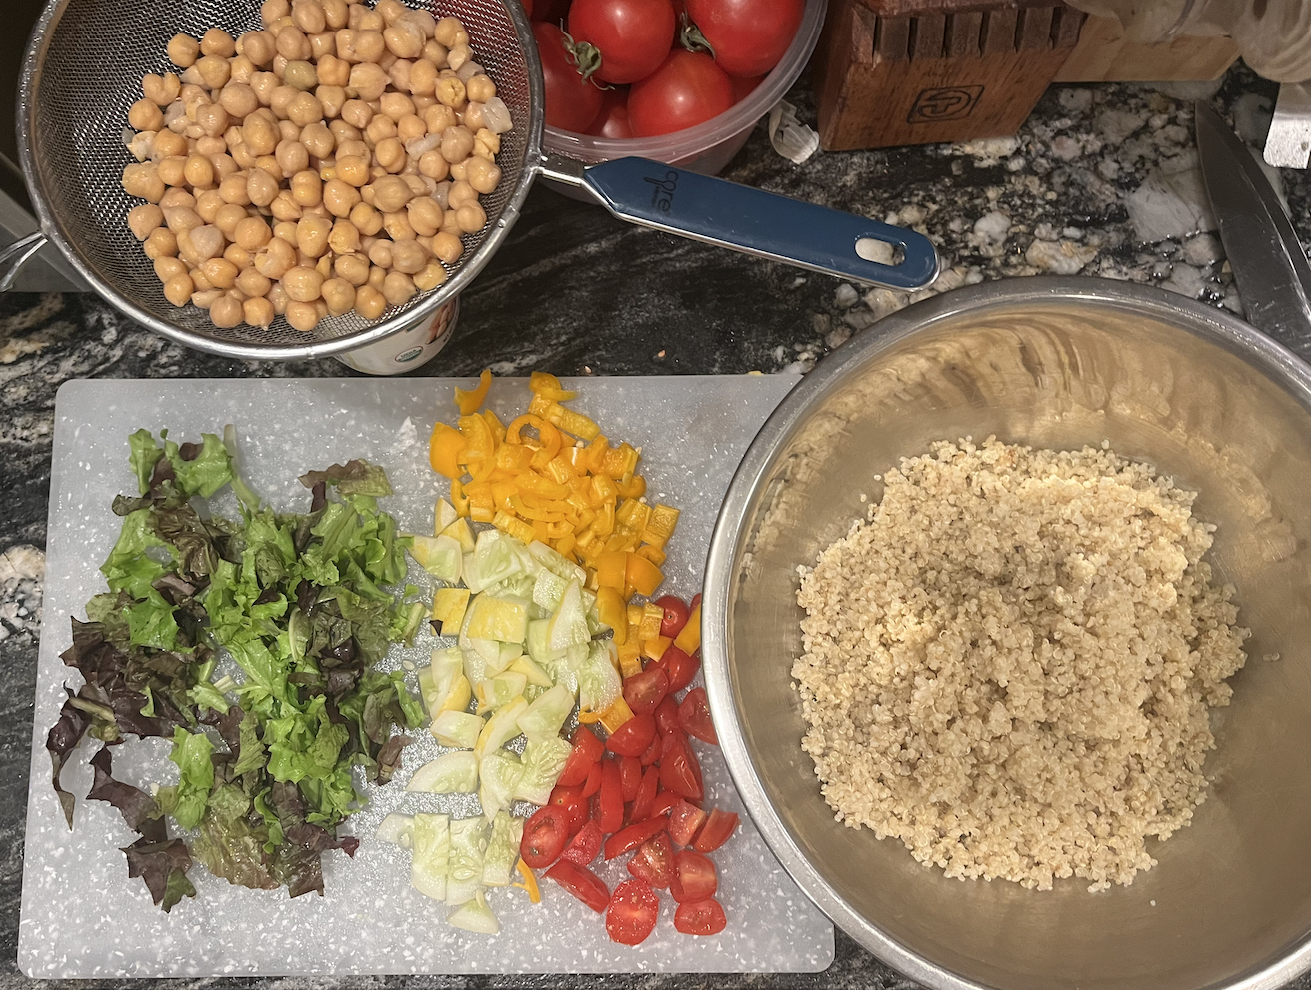 Chickpeas, Quinoa, and veggies prepared on a kitchen counter